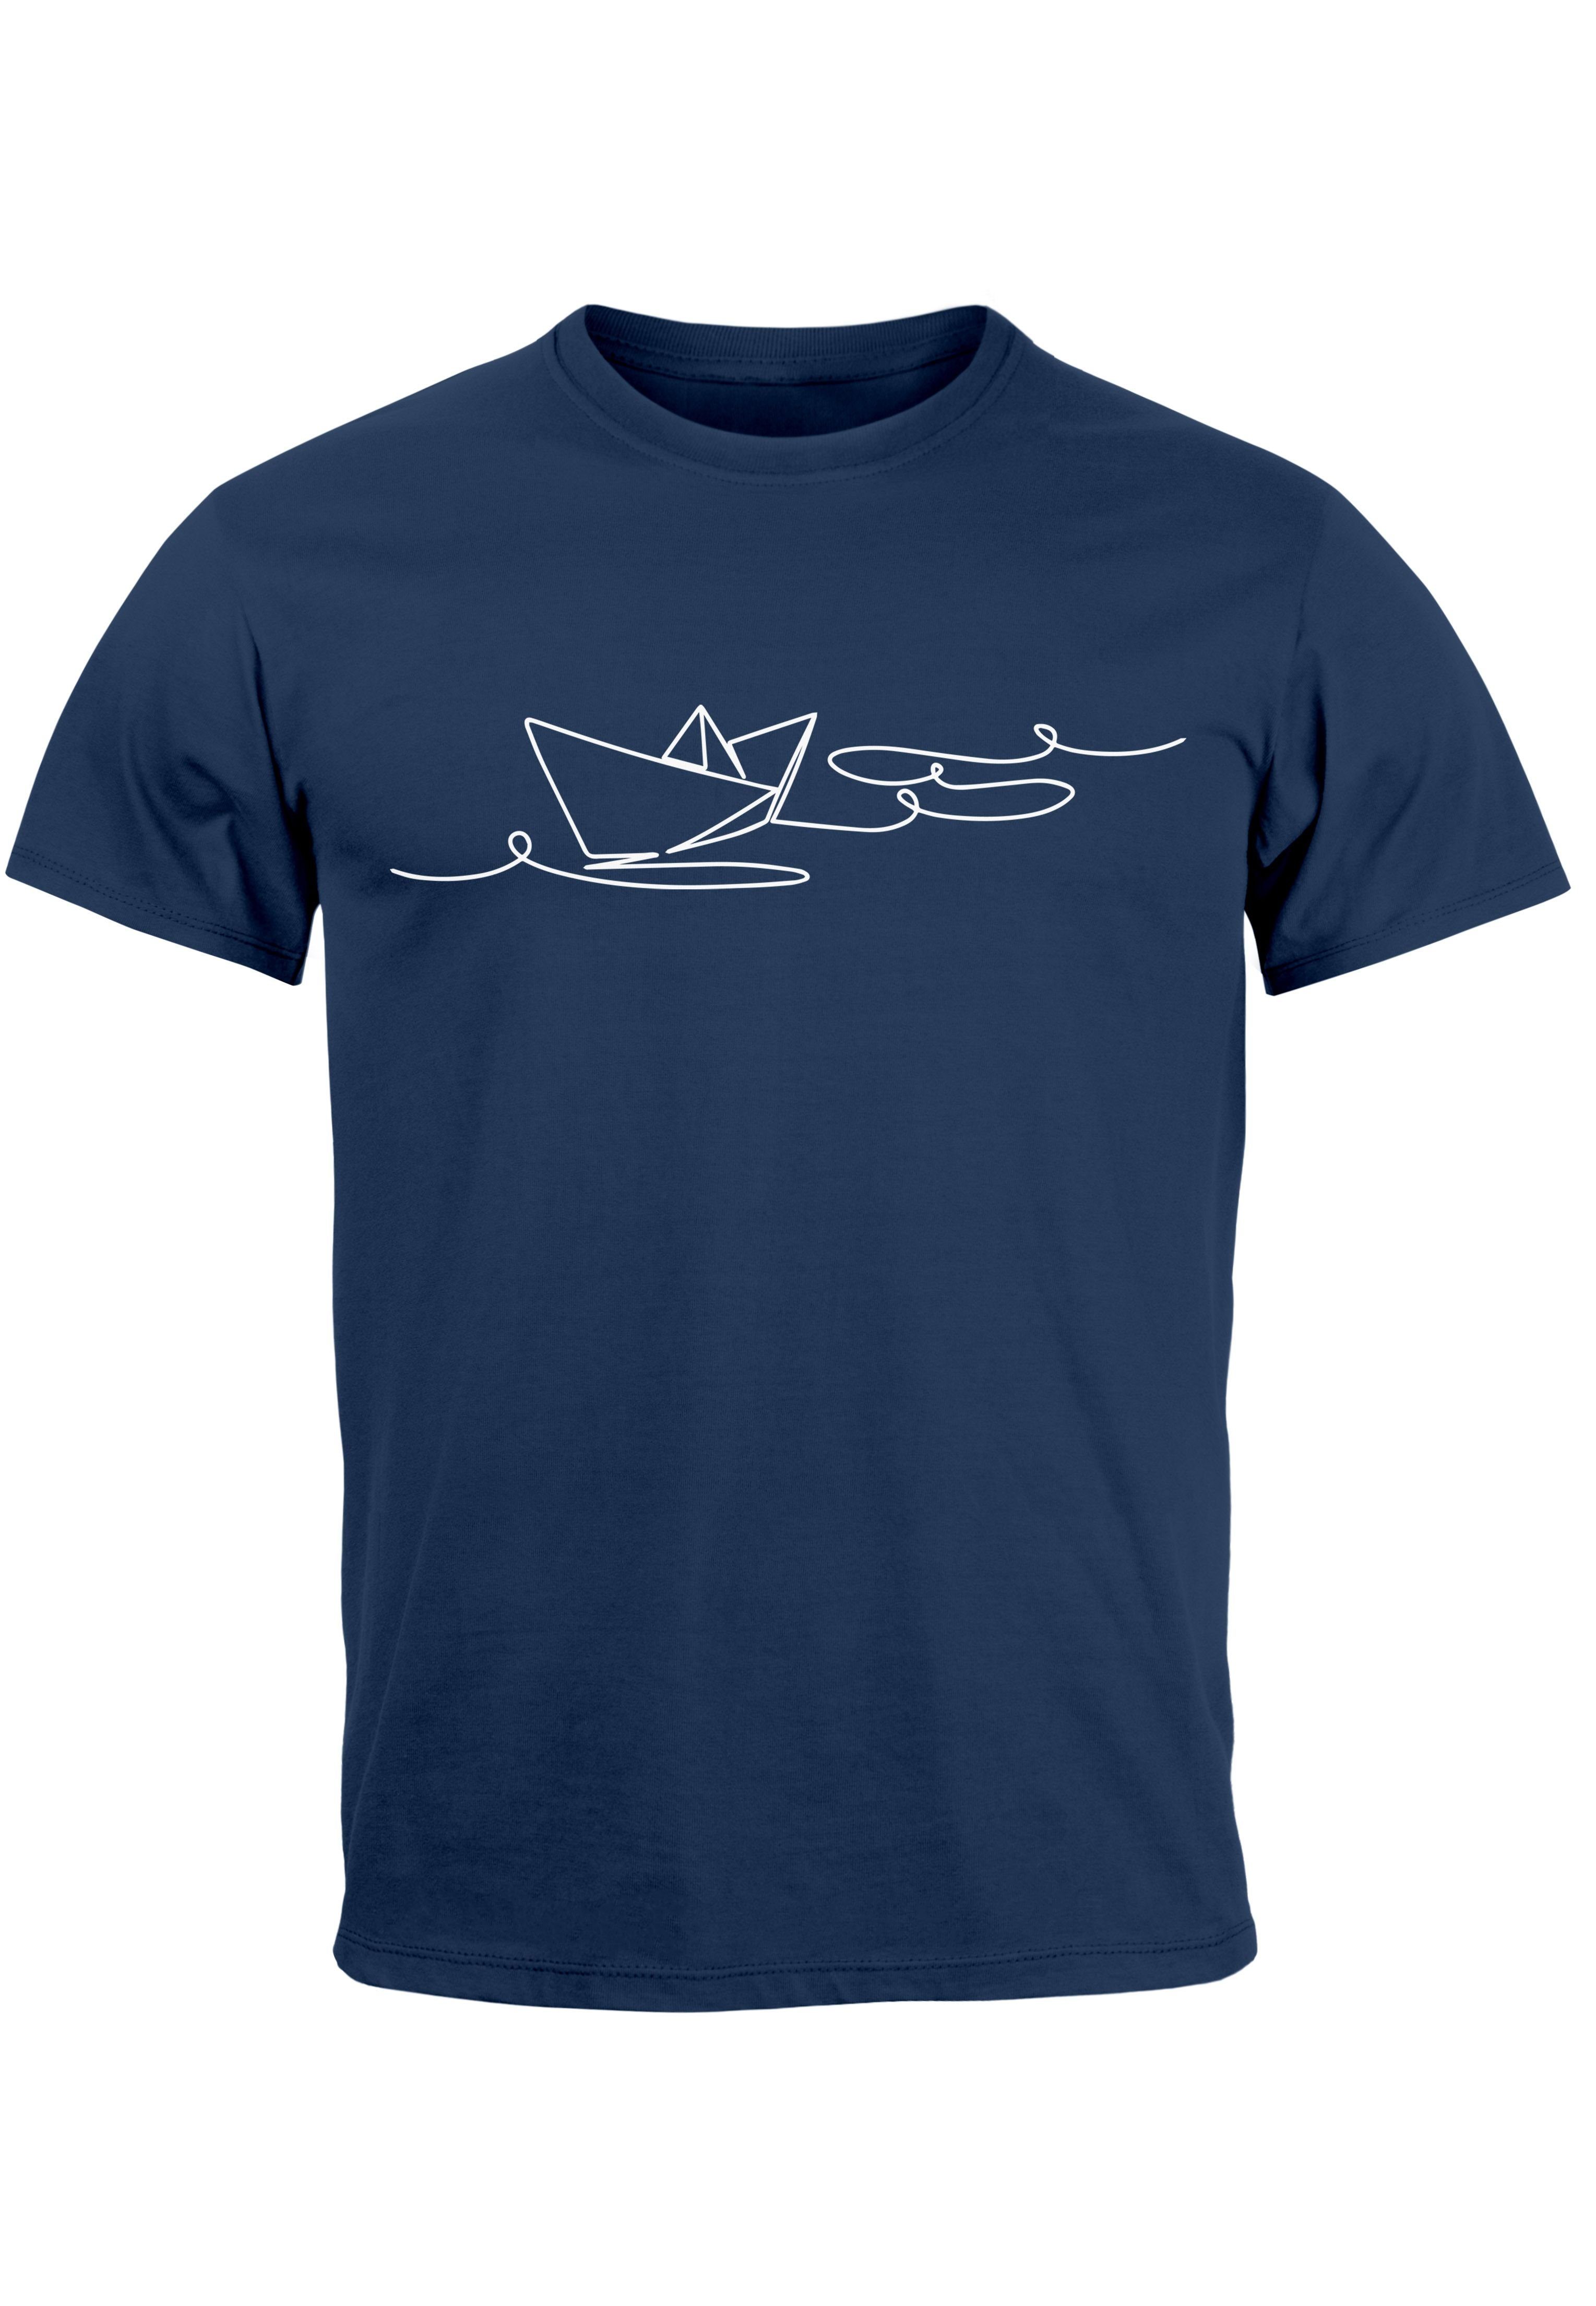 Neverless navy Print Print-Shirt Boot Papier-Schiff Origami mit T-Shirt Polygon Print Aufdruck Fashi Herren